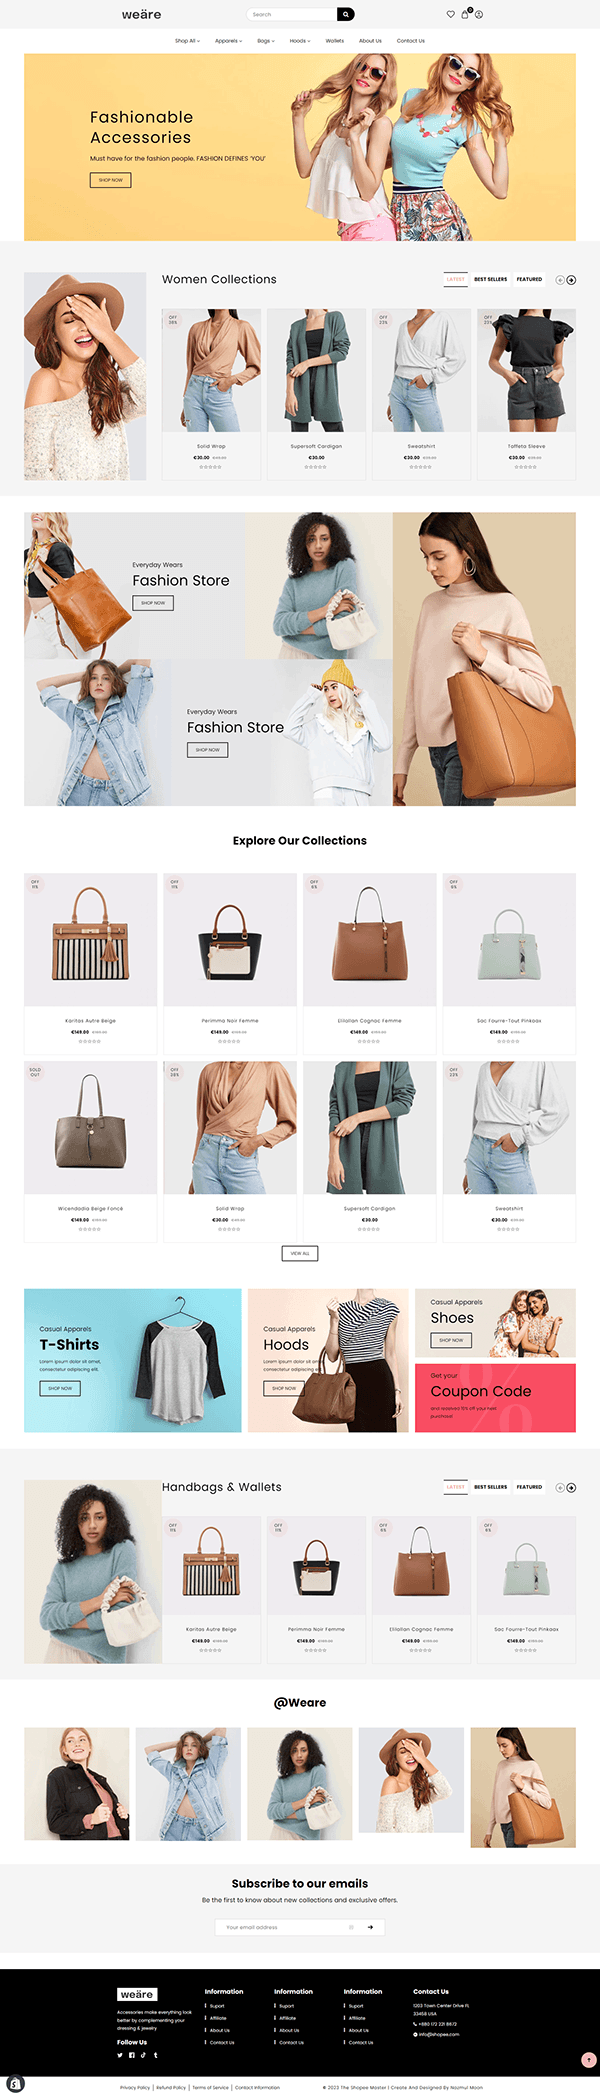 Shopify Store Design | Shopify Website | Shopify Expert